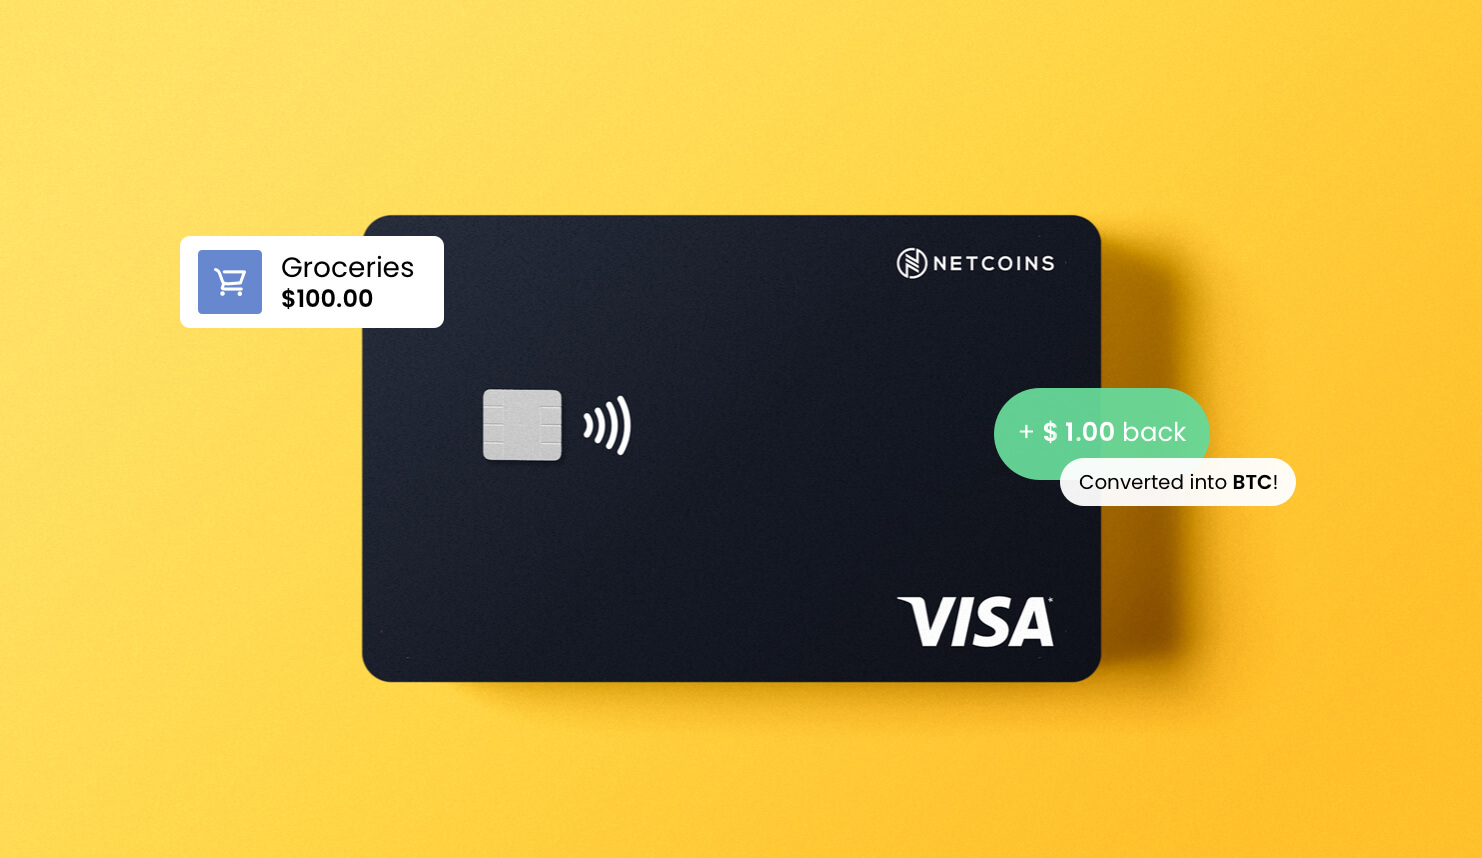 Netcoins Pay Card: Earn 1% back in bitcoin